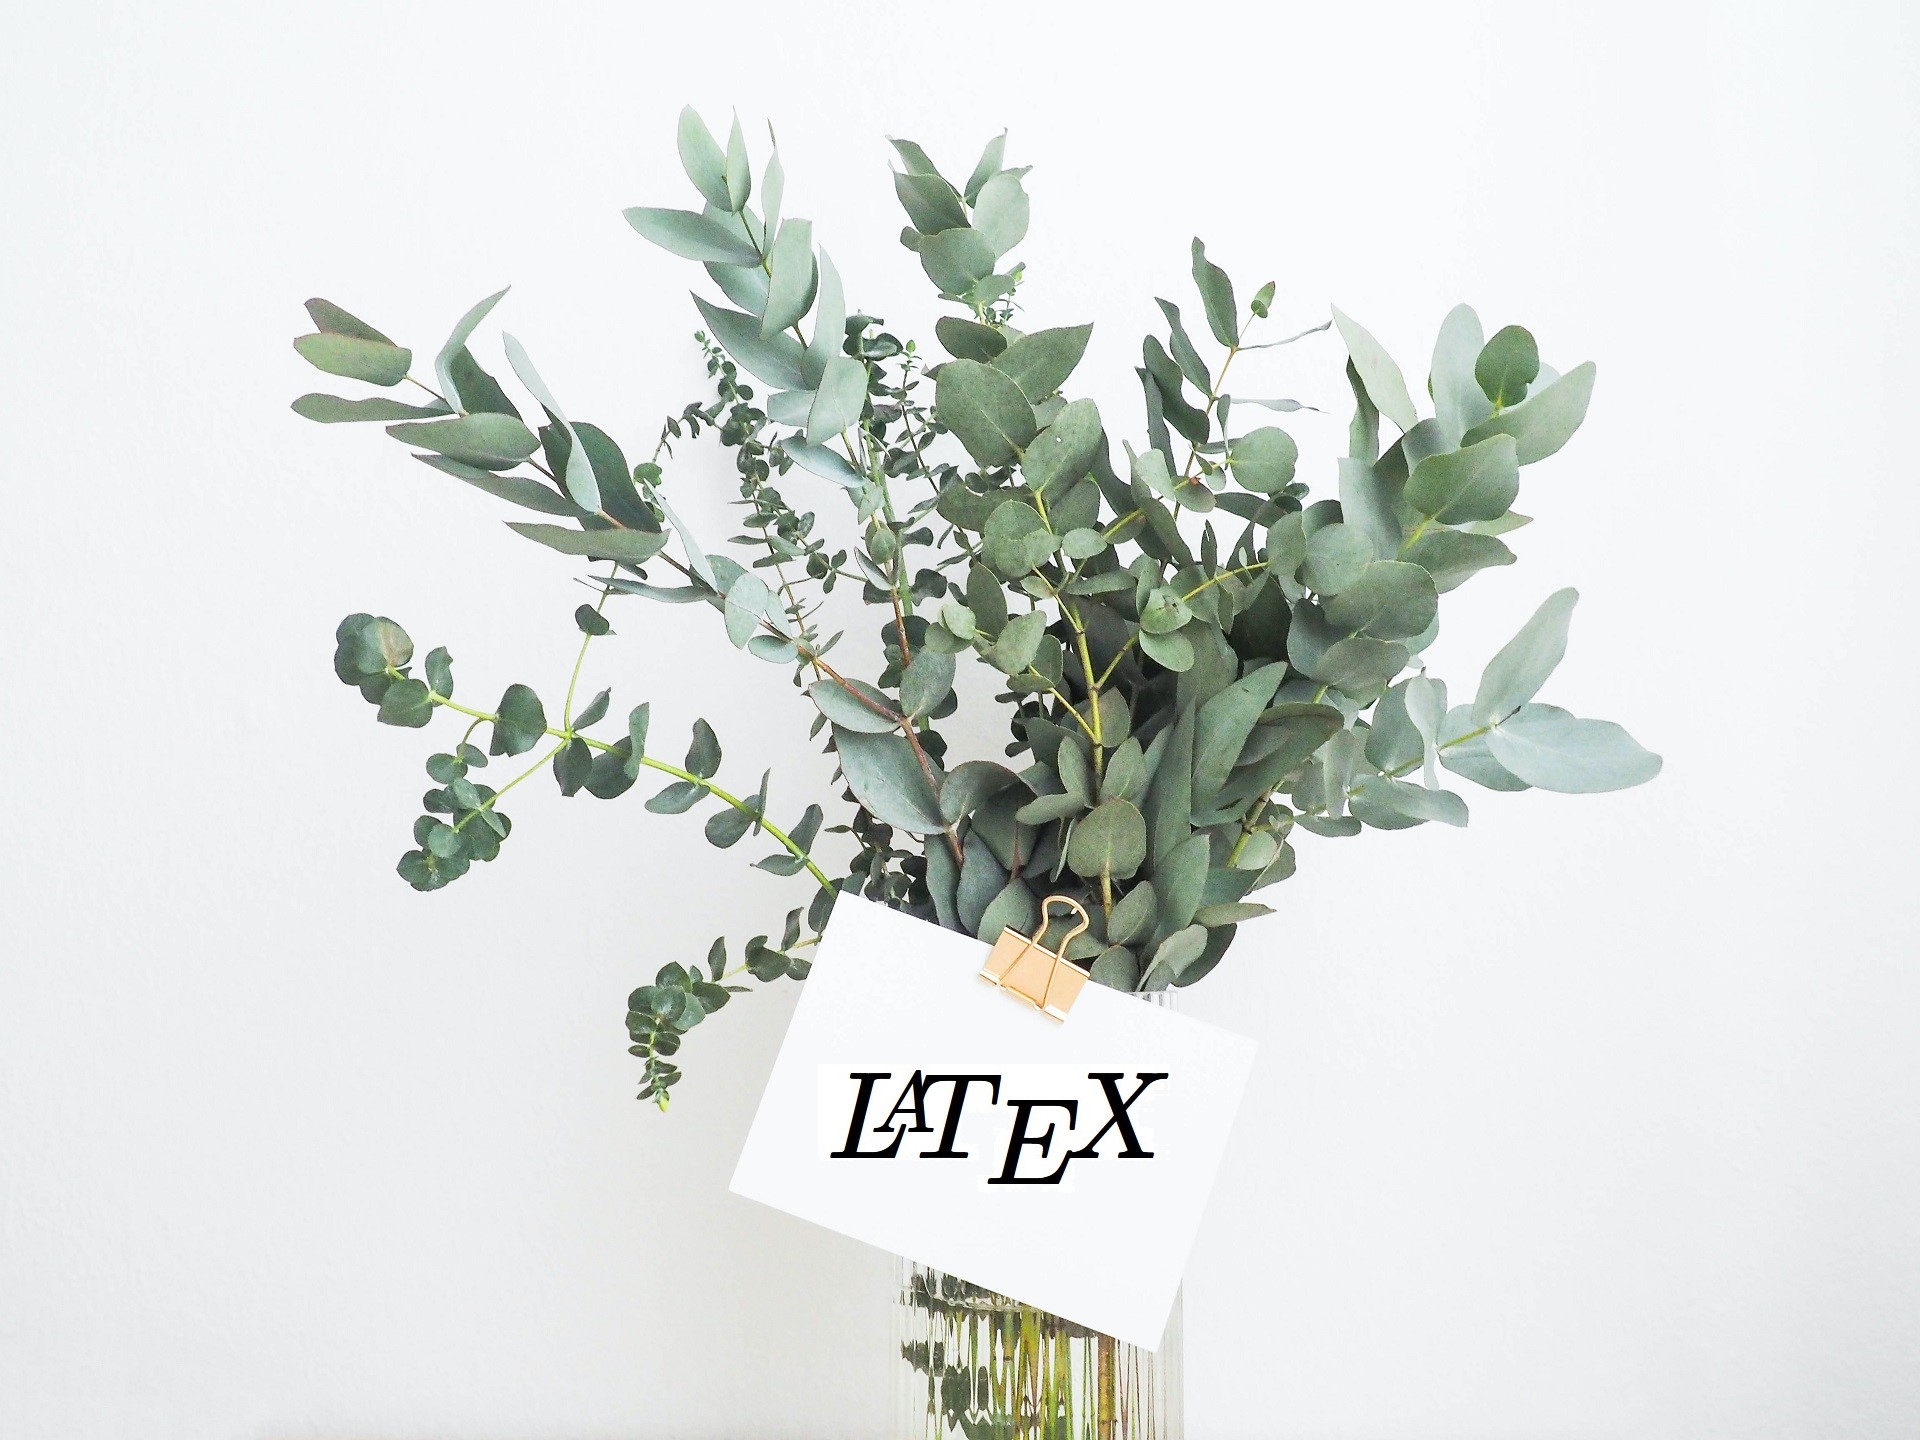 LaTeXと書かれた紙がピン止めされた、おしゃれな植物